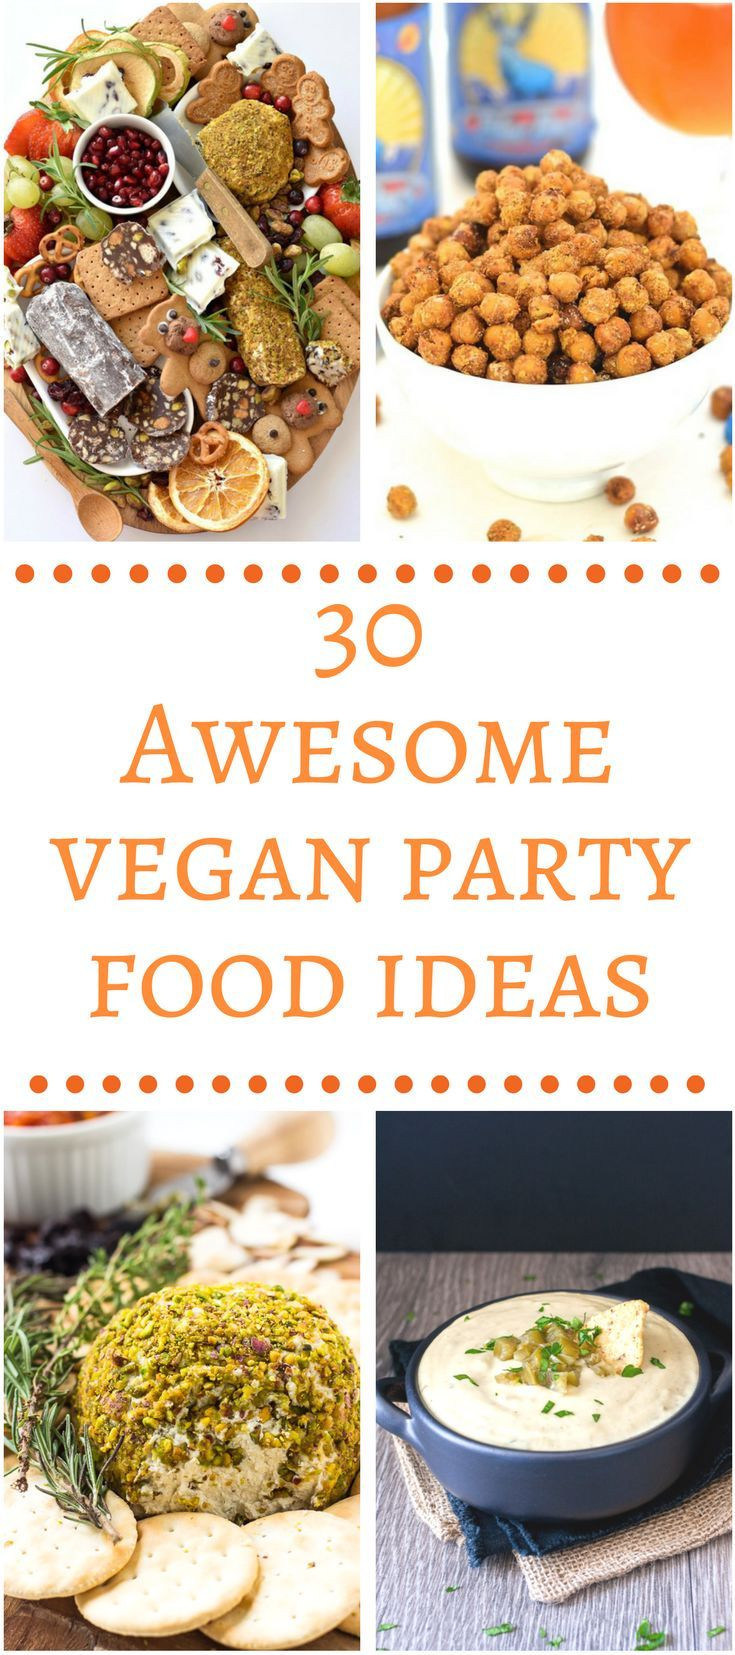 Vegan Dinner Party Ideas
 Best 25 Vegan potluck ideas on Pinterest